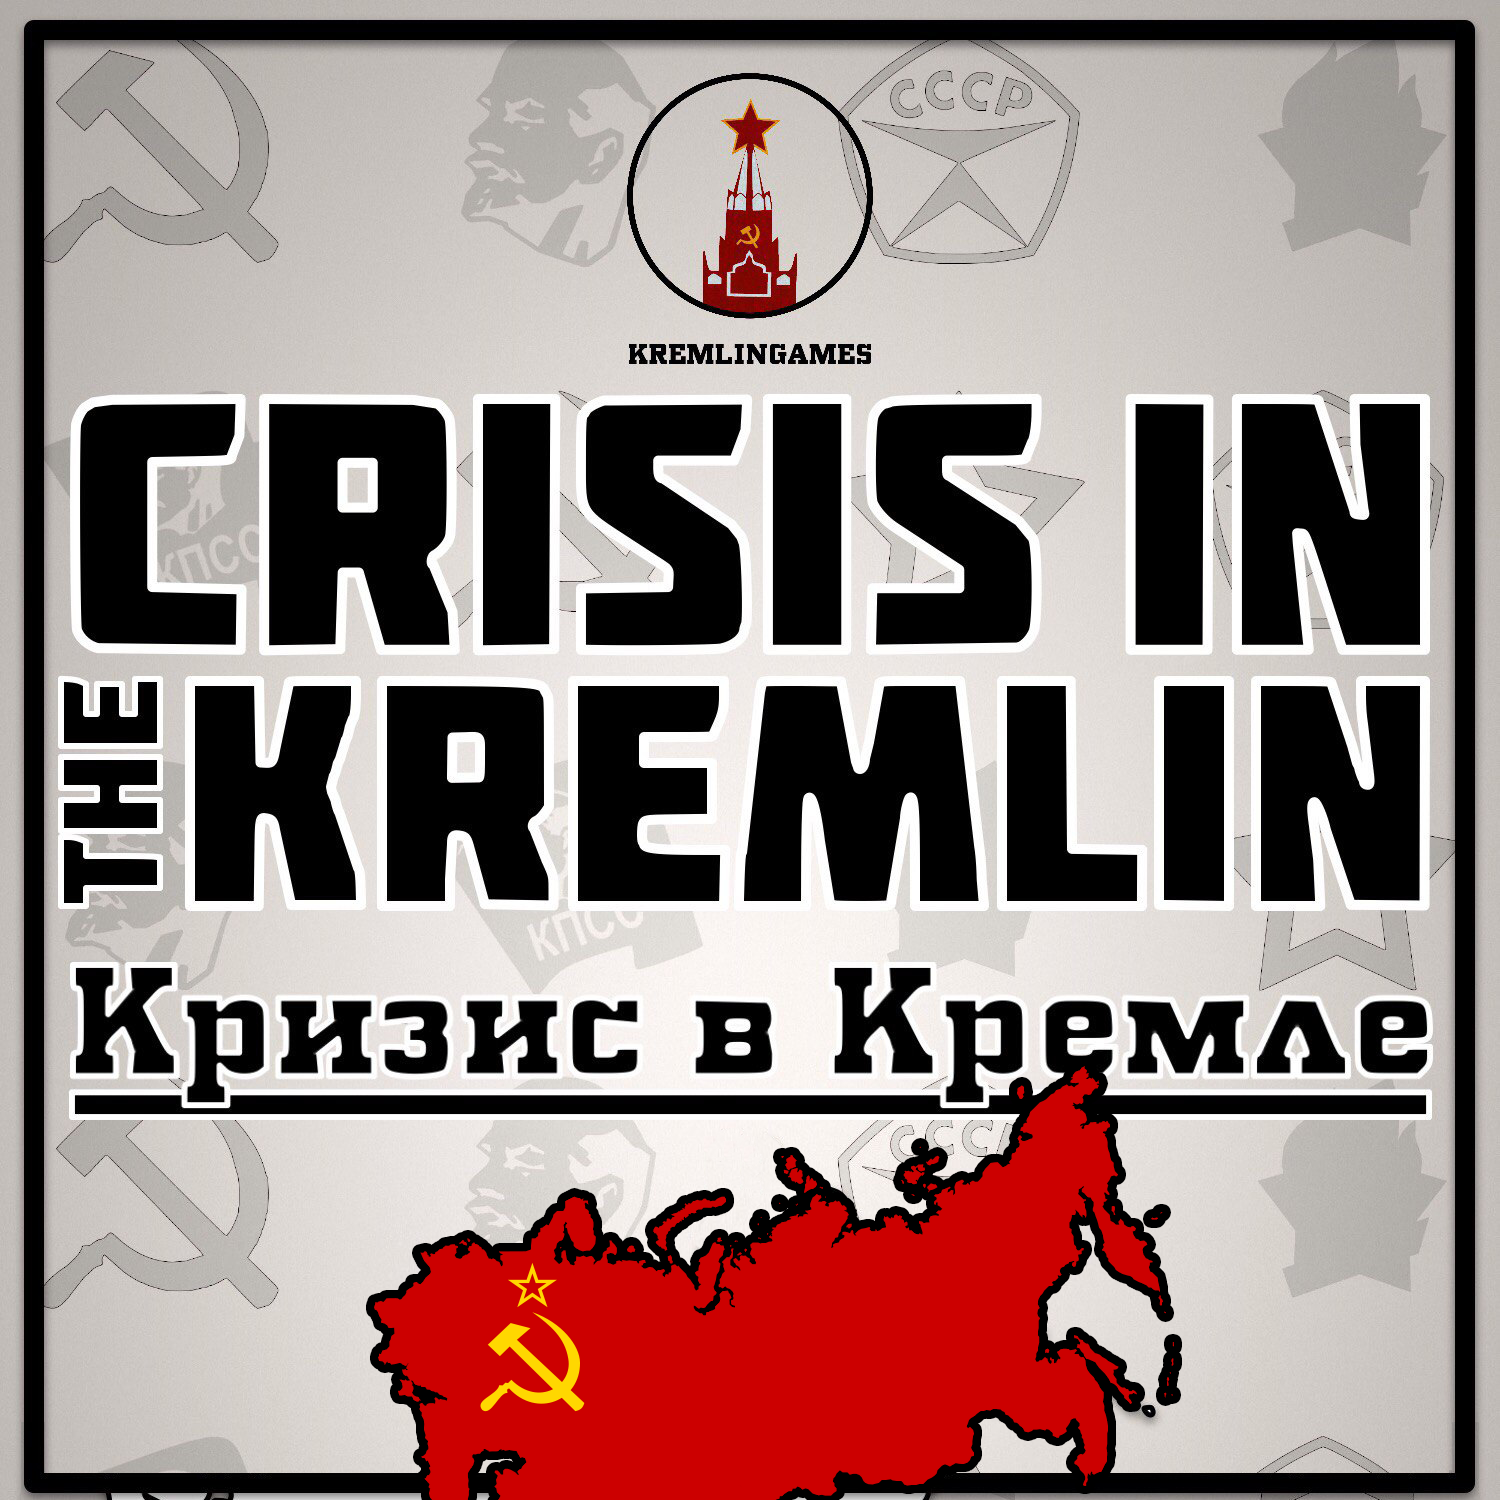 The kremlin has been. Crisis in the Kremlin игра. Кризис в Кремле. Crisis in the Kremlin 2017. Кризис в Кремле игра 2017.